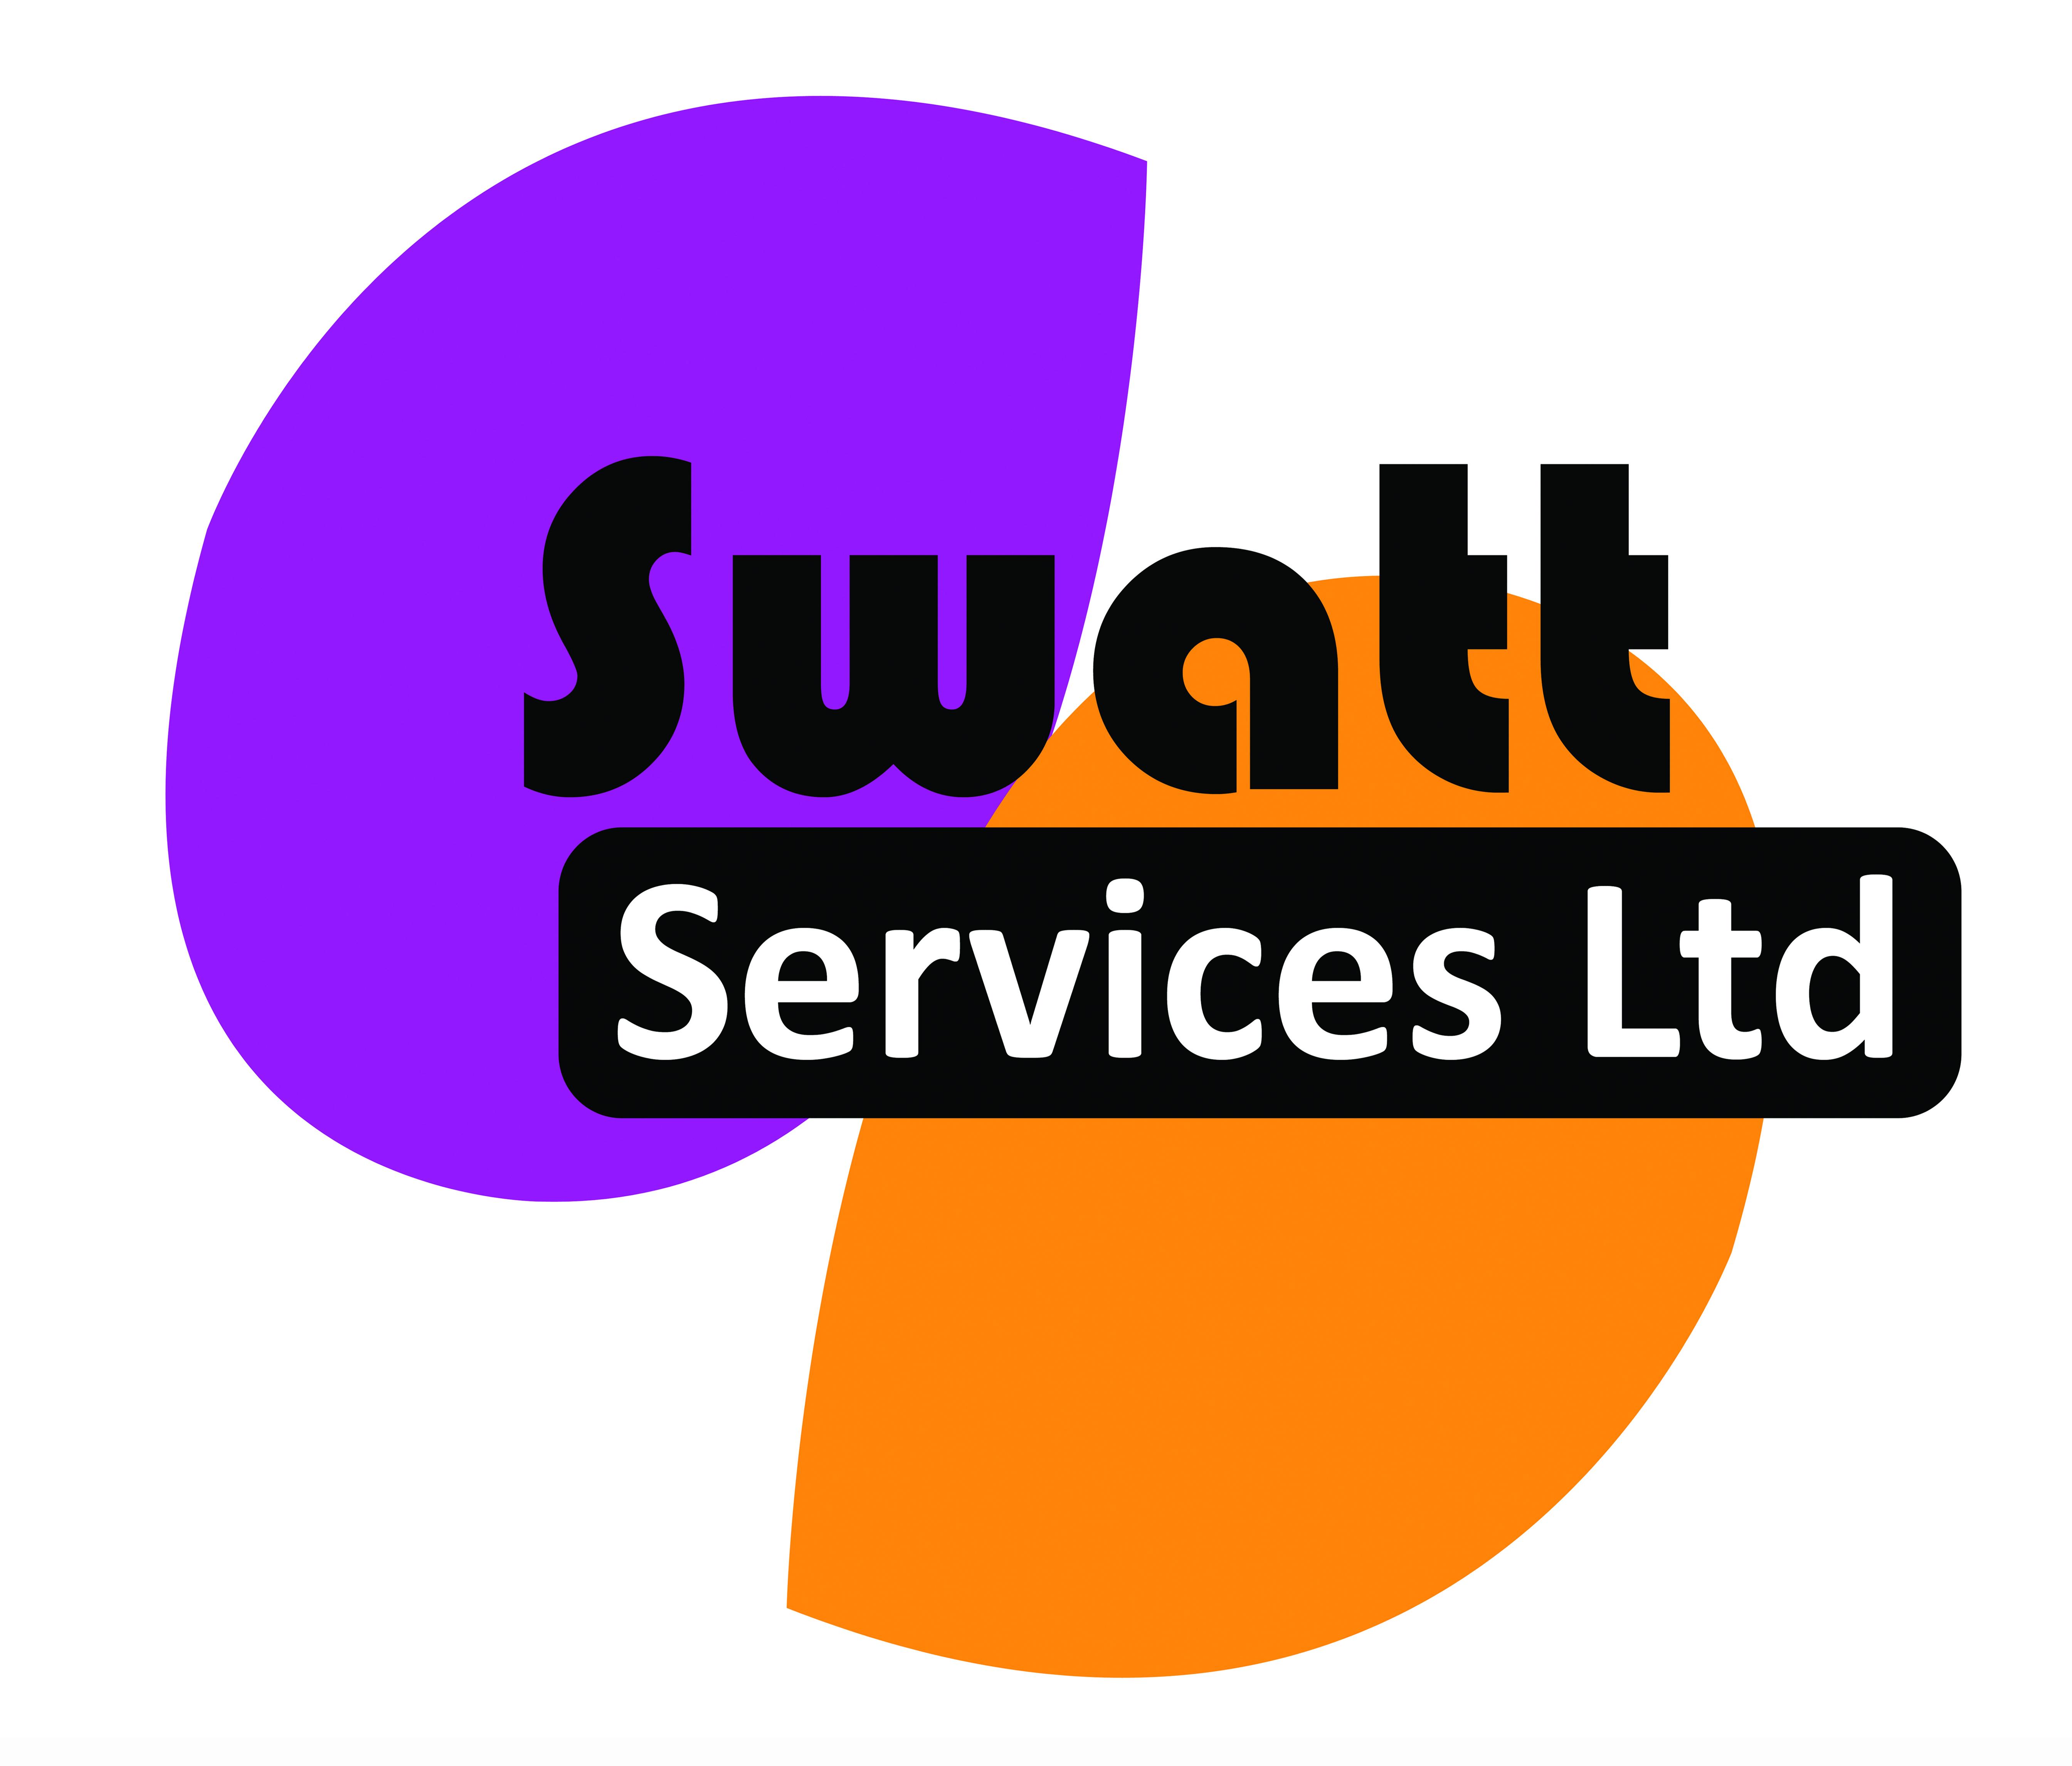 SWATT SERVICES LTD